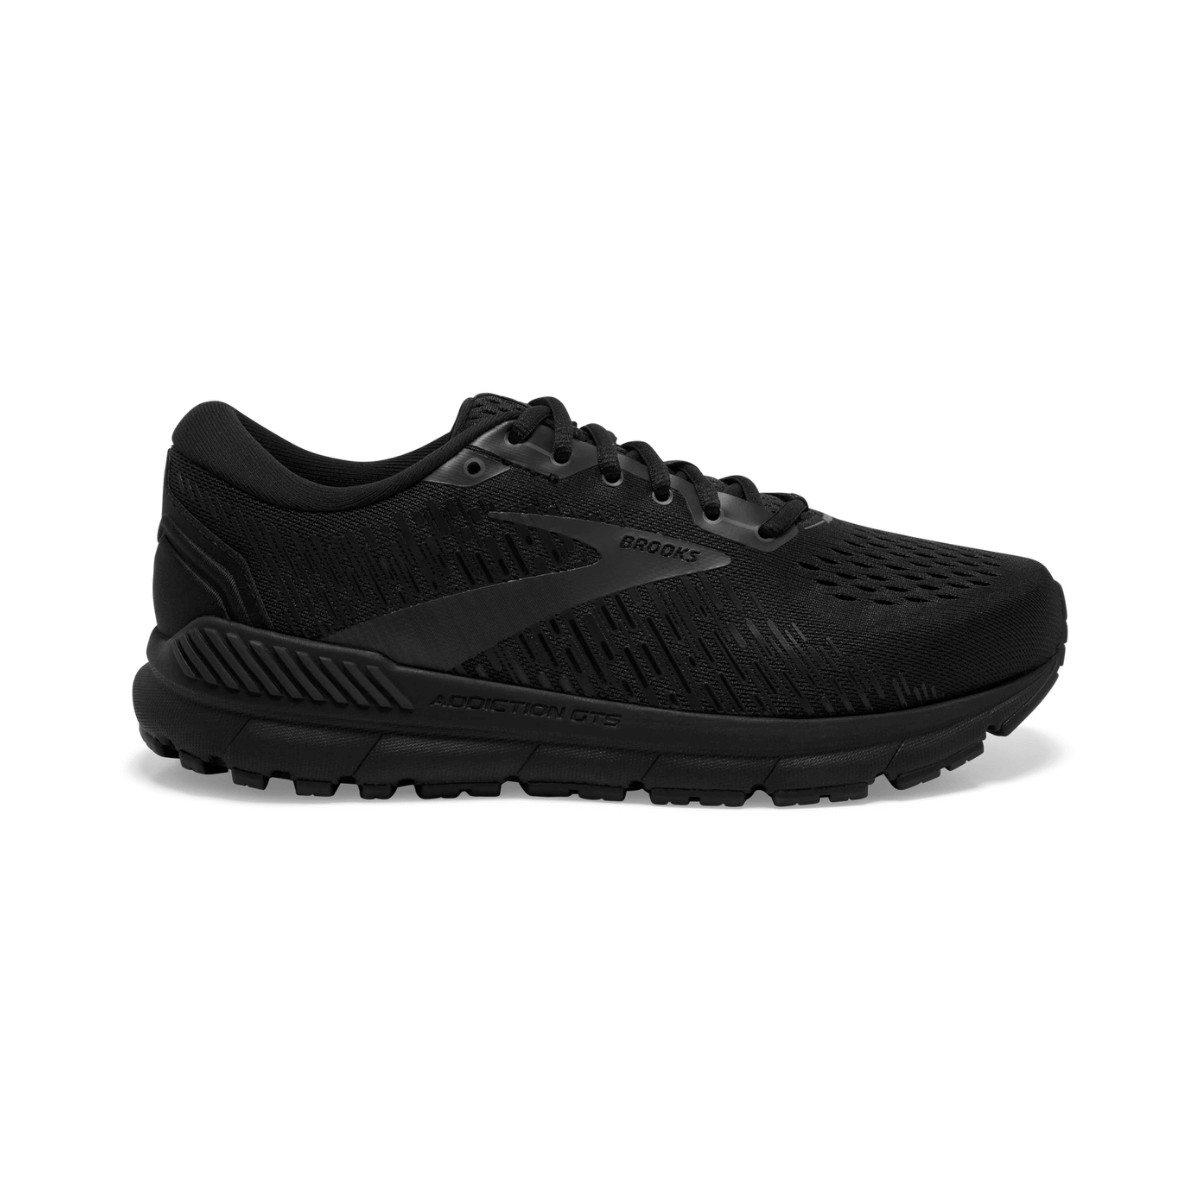 Brooks Addiction GTS 15 Shoes Black SS22, Size 42 - EUR